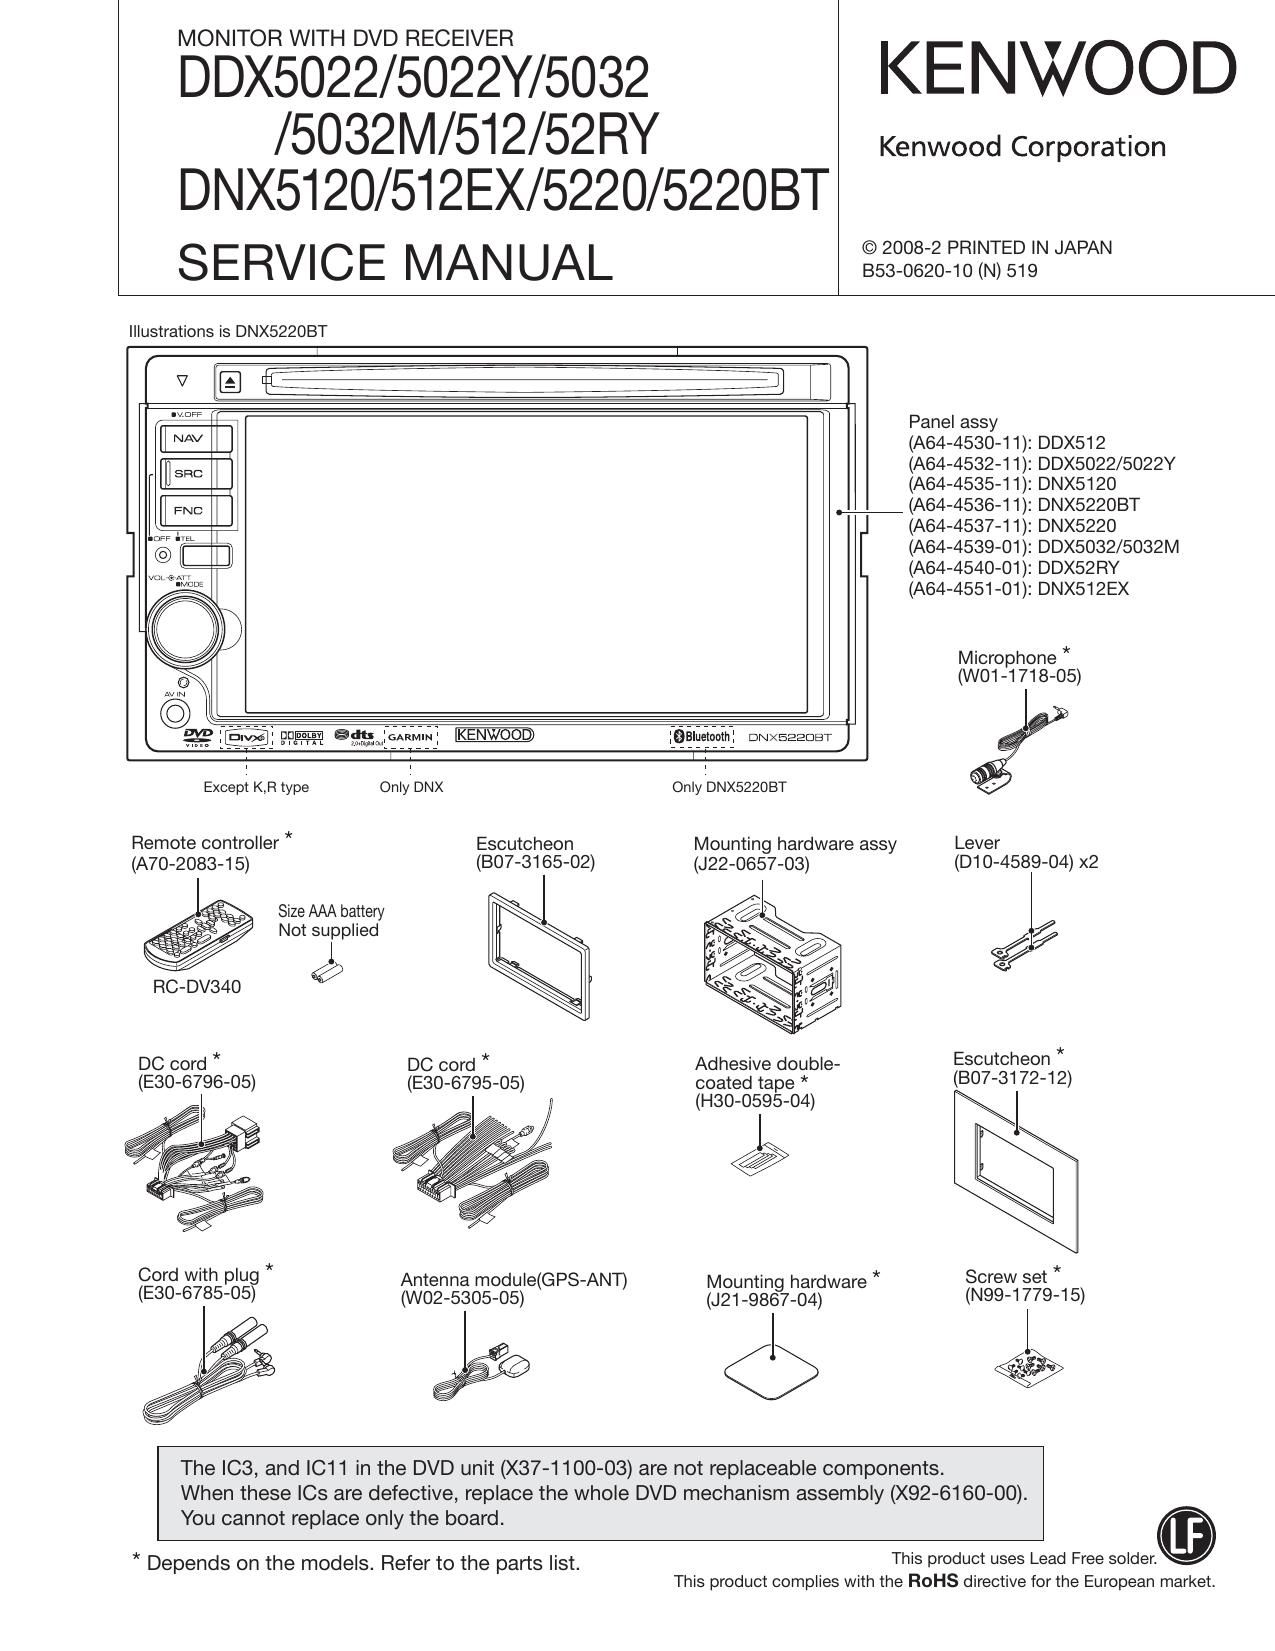 Kenwood DDX 5022 HU Service Manual